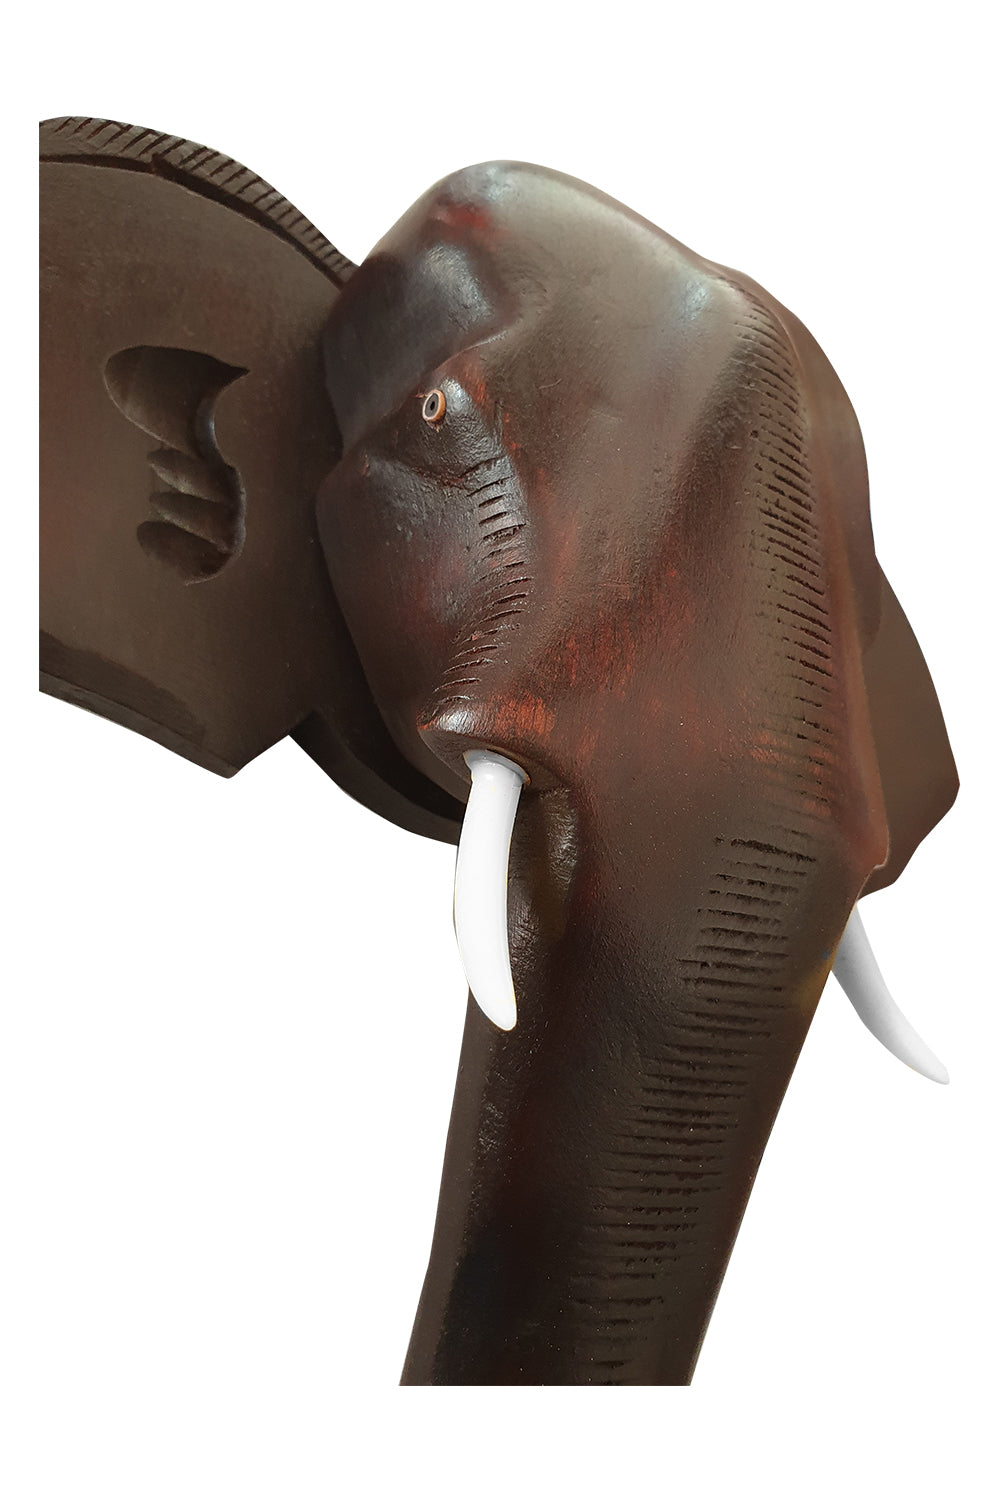 Southloom Handmade Elephant Head Handicraft (Carved from Mahogany Wood) 10 Inches